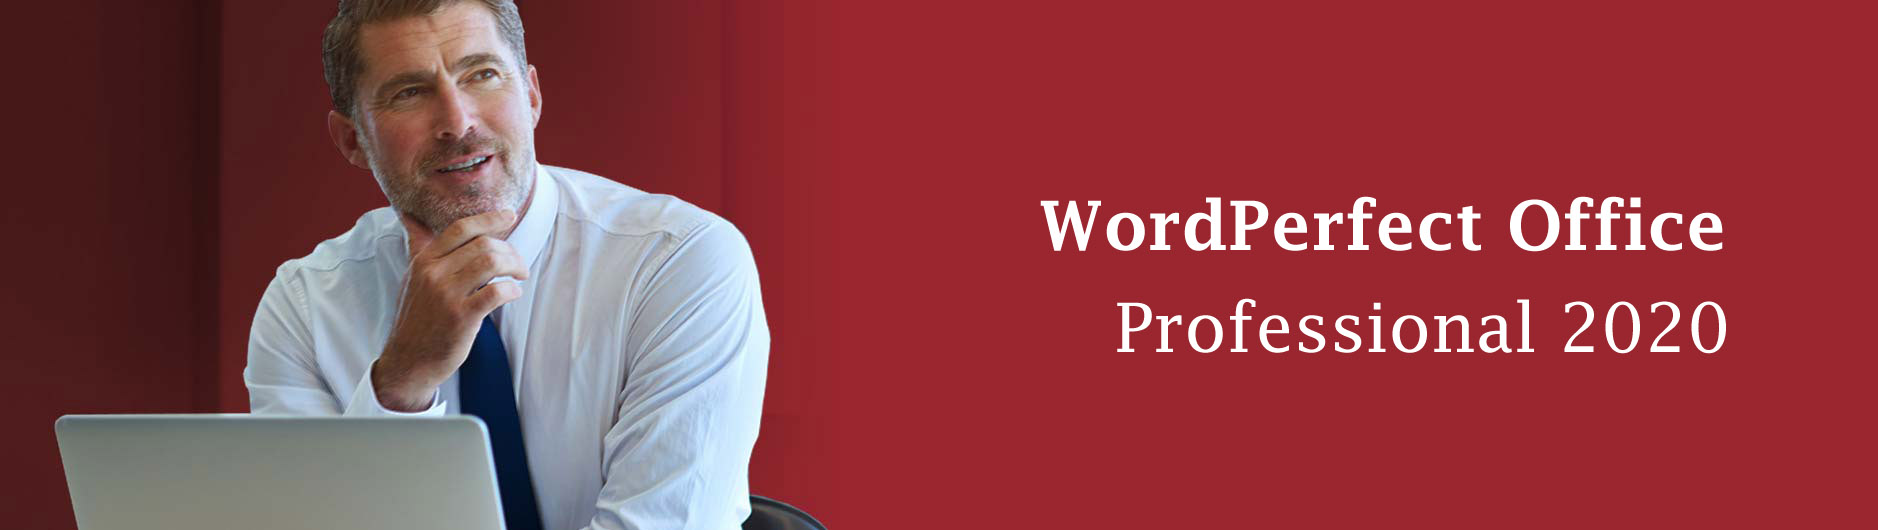 WordPerfect Office Professional 2020